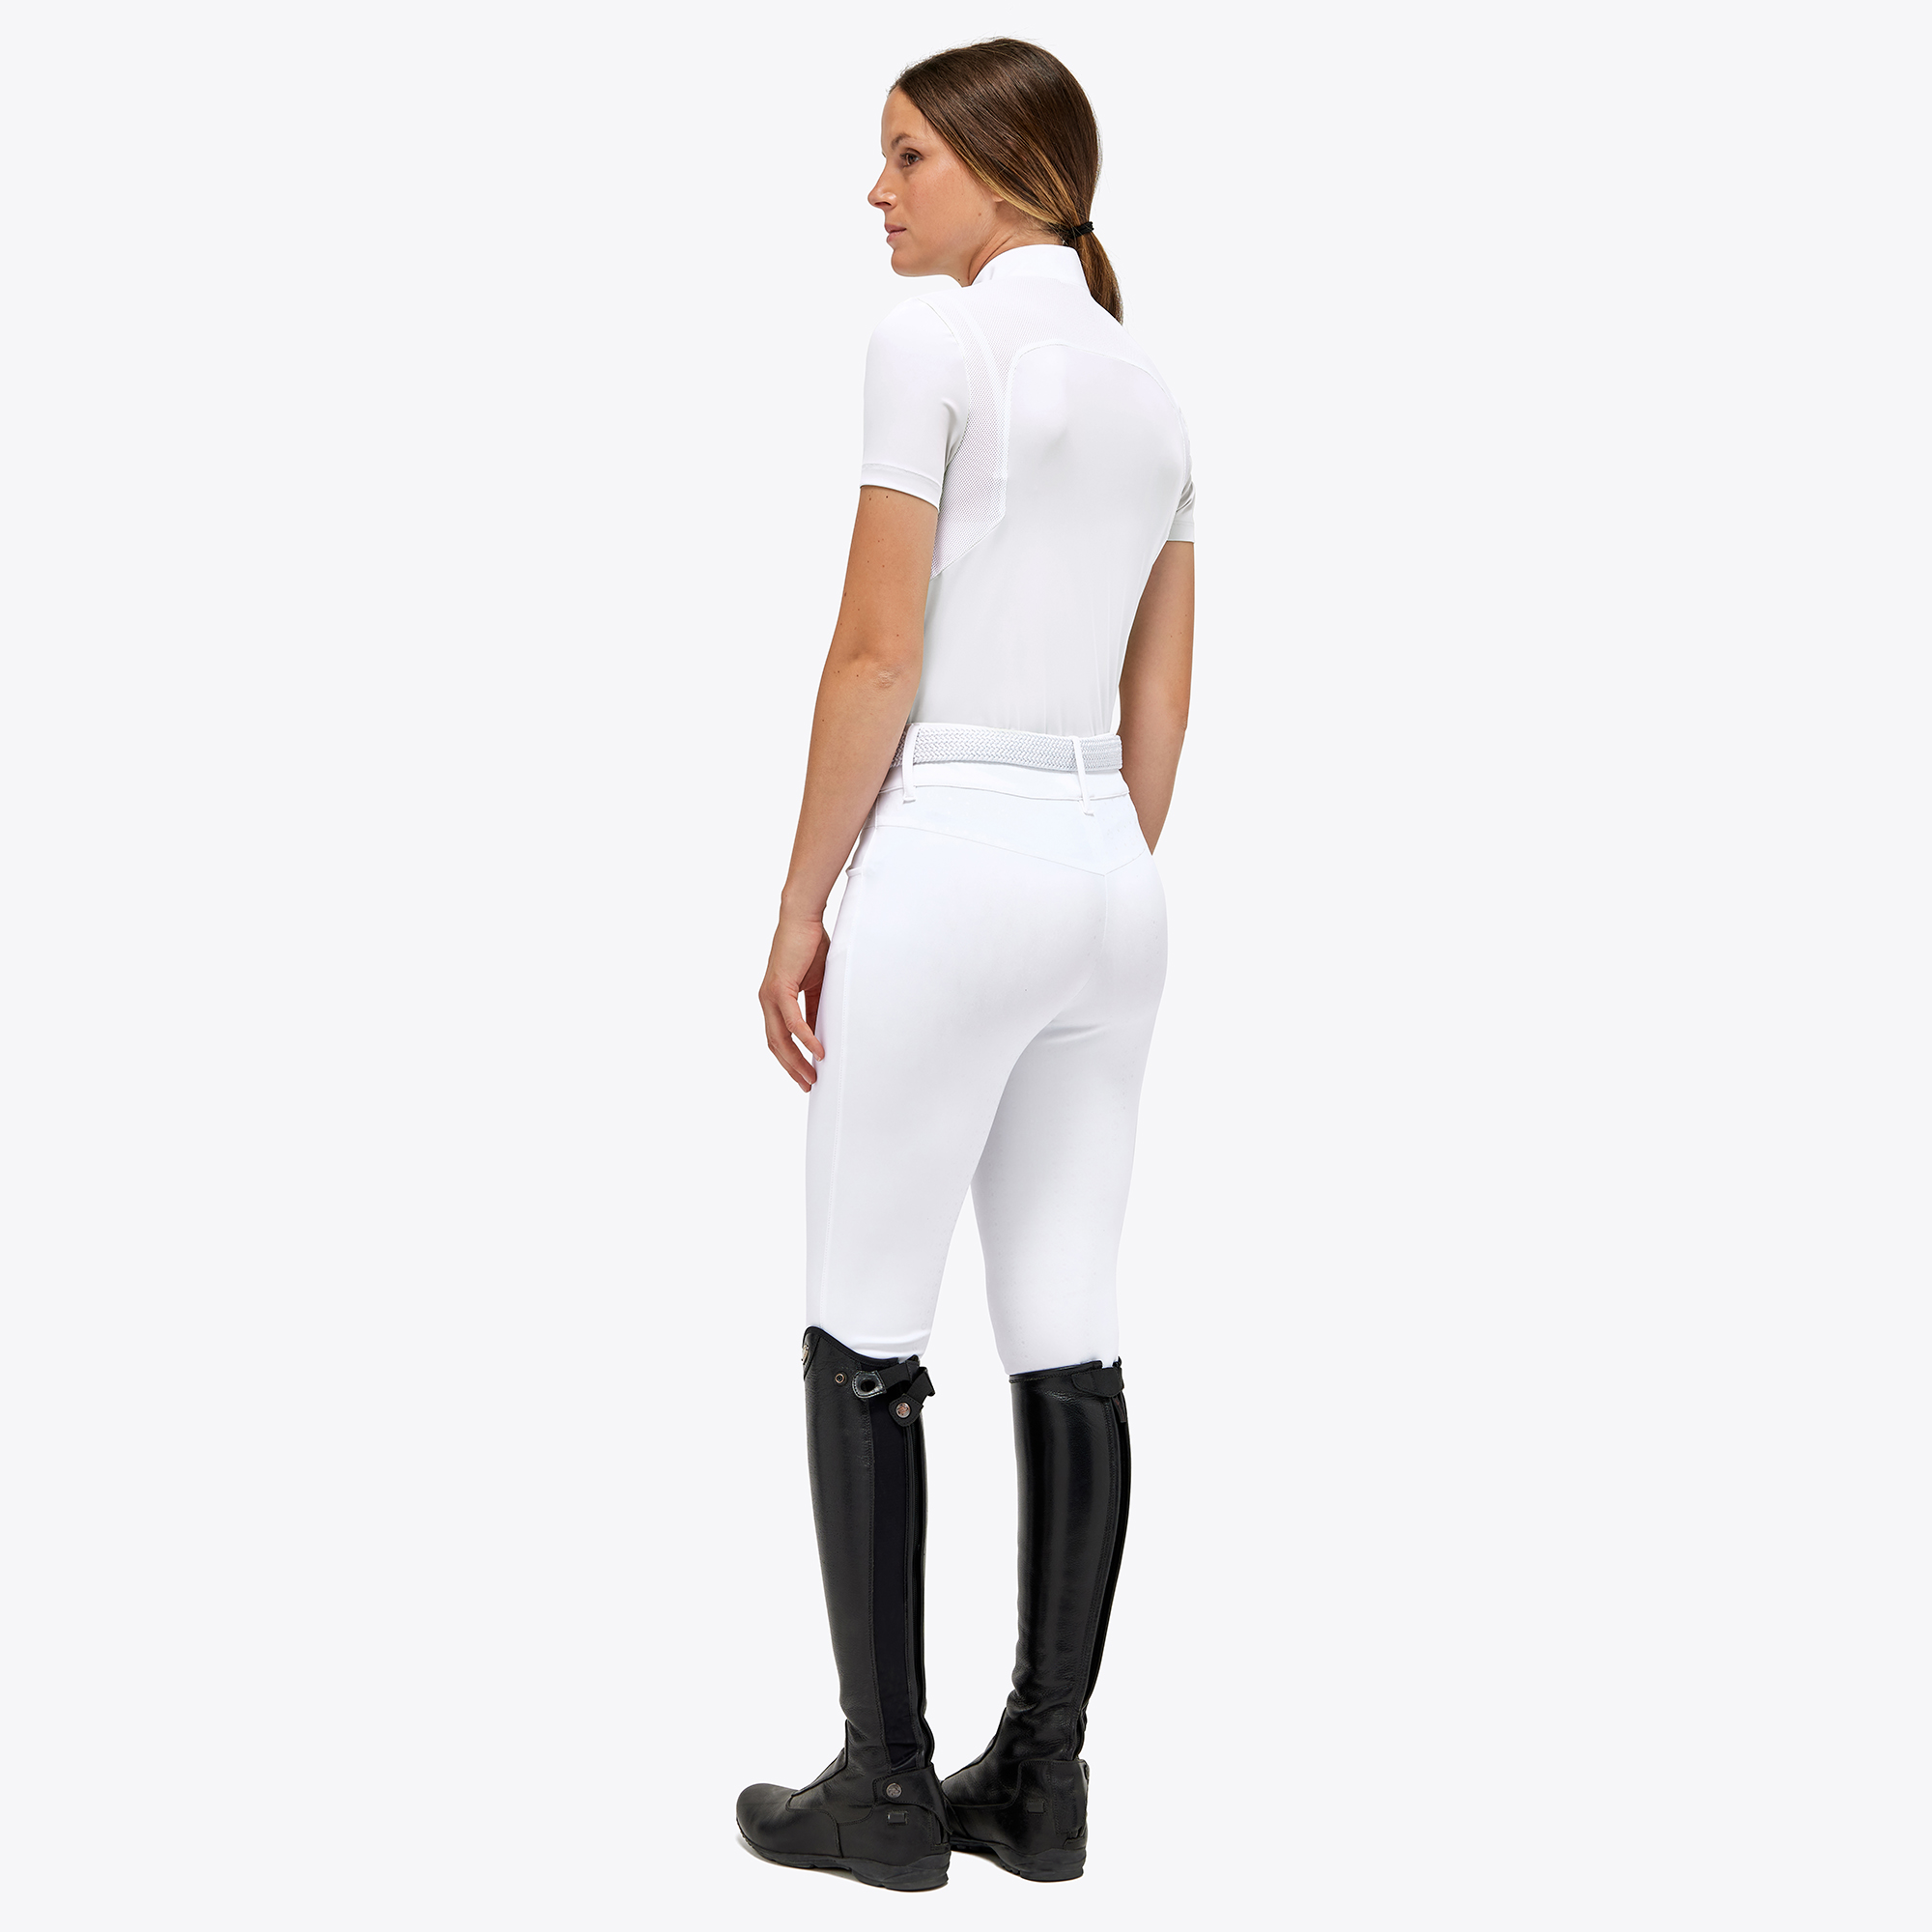 CAVALLERIA TOSCANA elegantes Damen Kurzarm Turniershirt Jersey Mesh - white/knit - L - 2